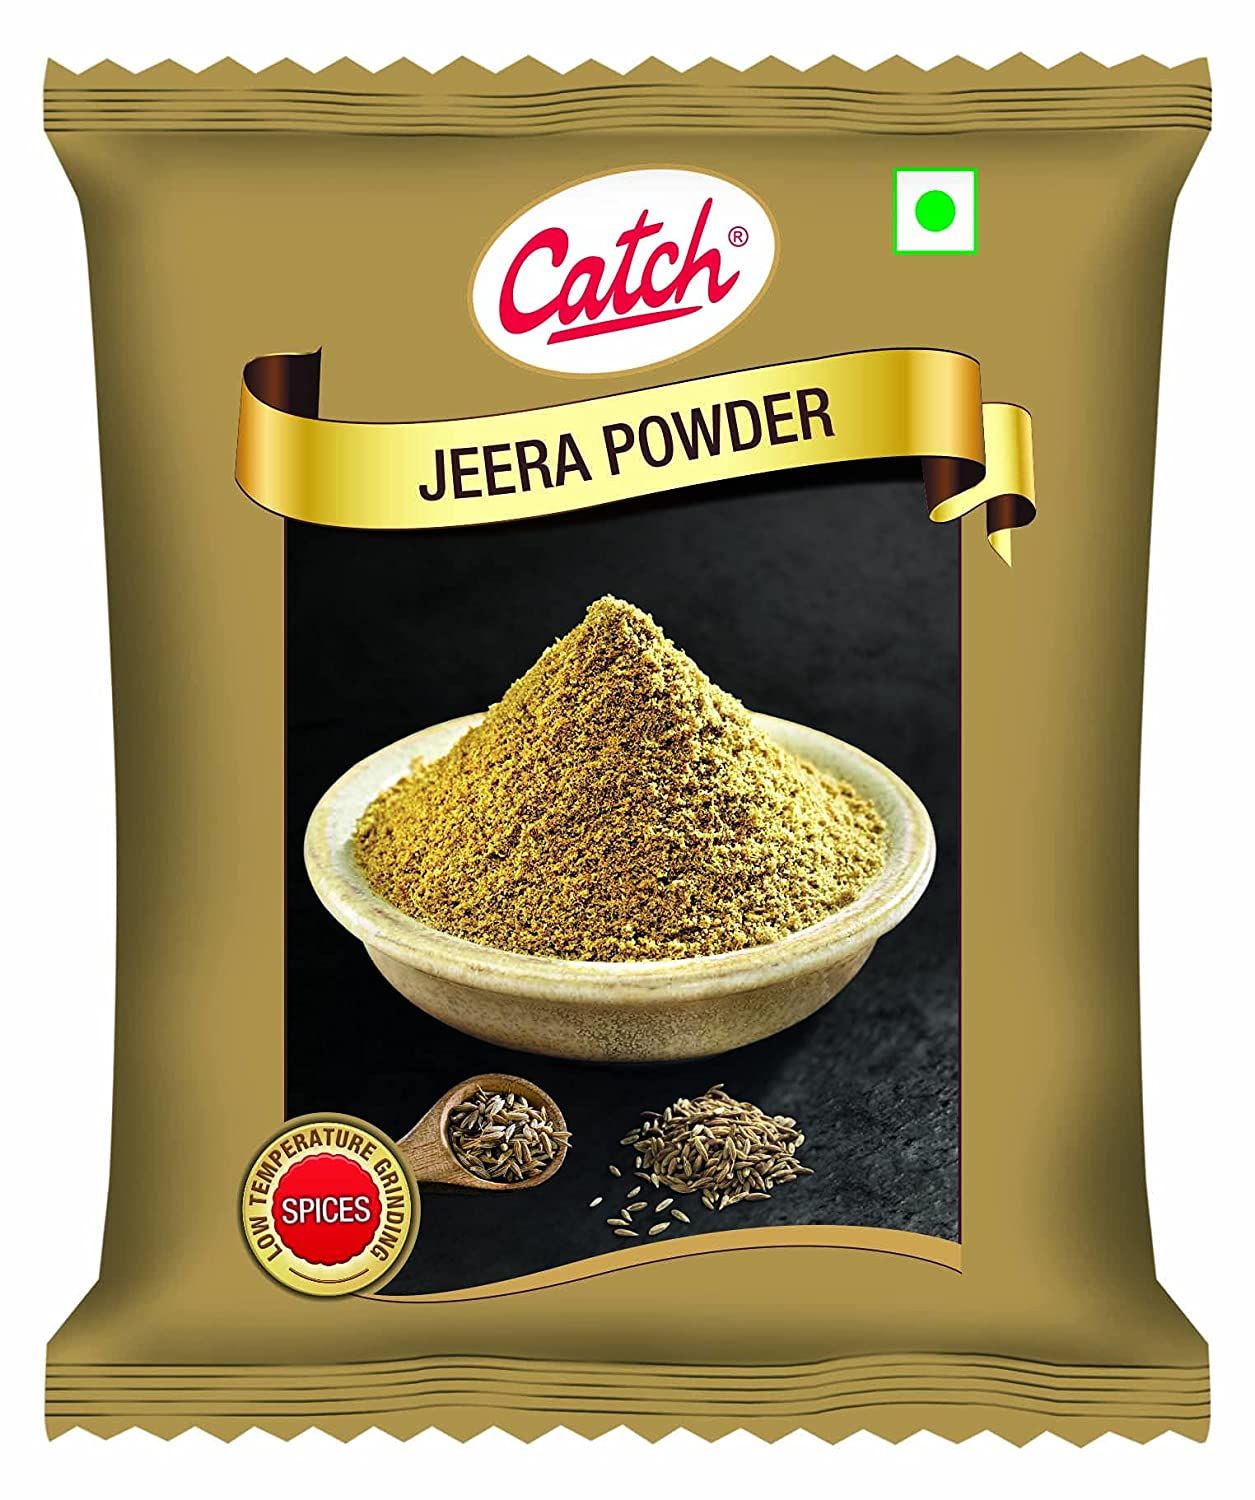 Catch Jeera Powder Image